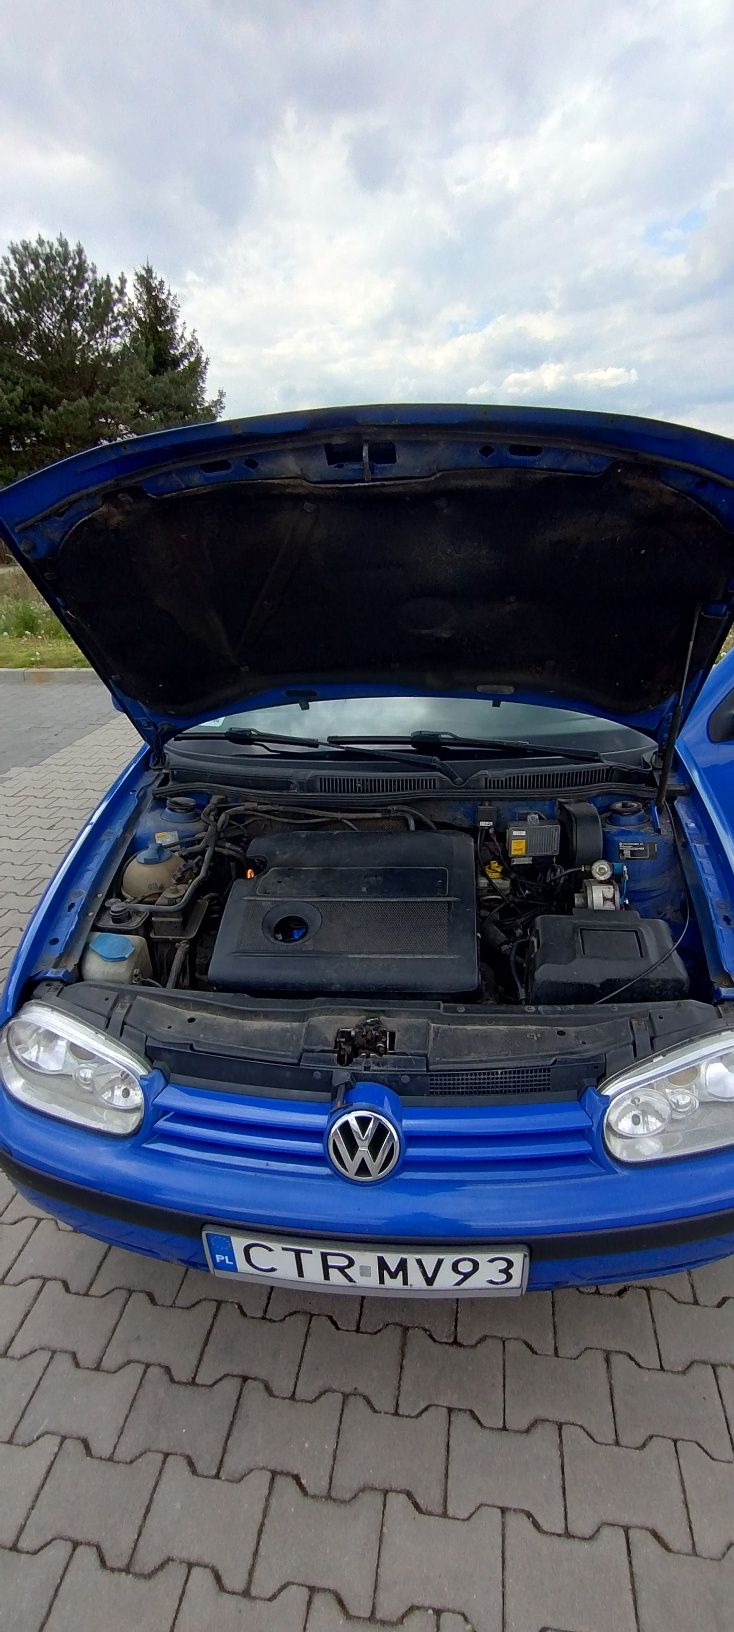 VW Golf 4 1.6 16v benzyna+gaz 2000r.